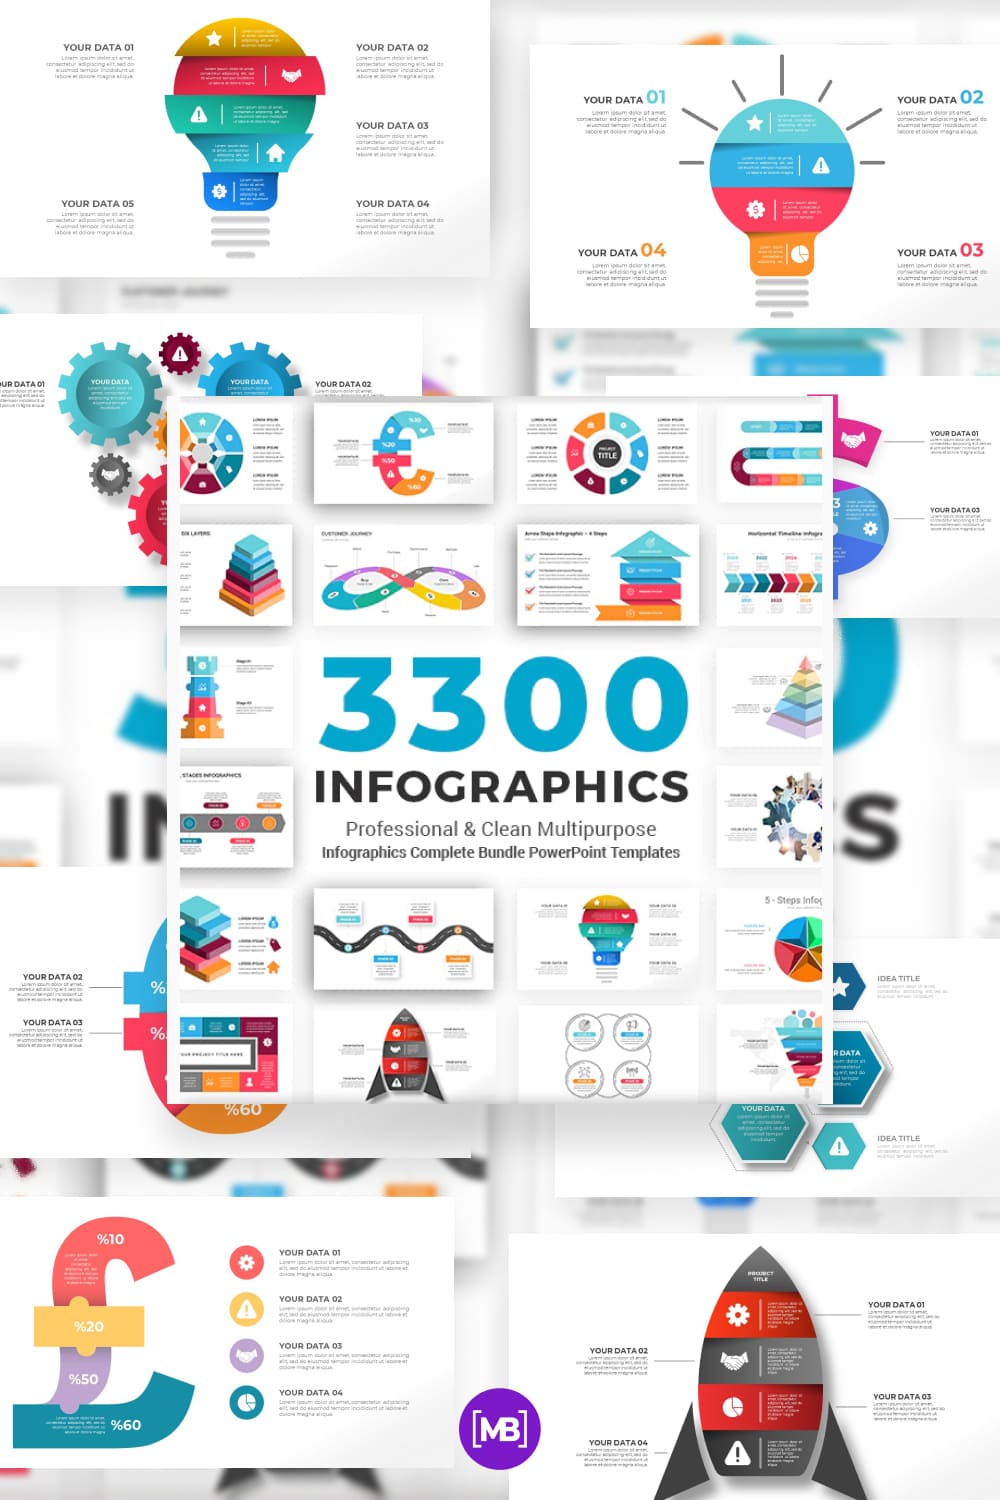 Infographics complete bundle powerpoint templates.